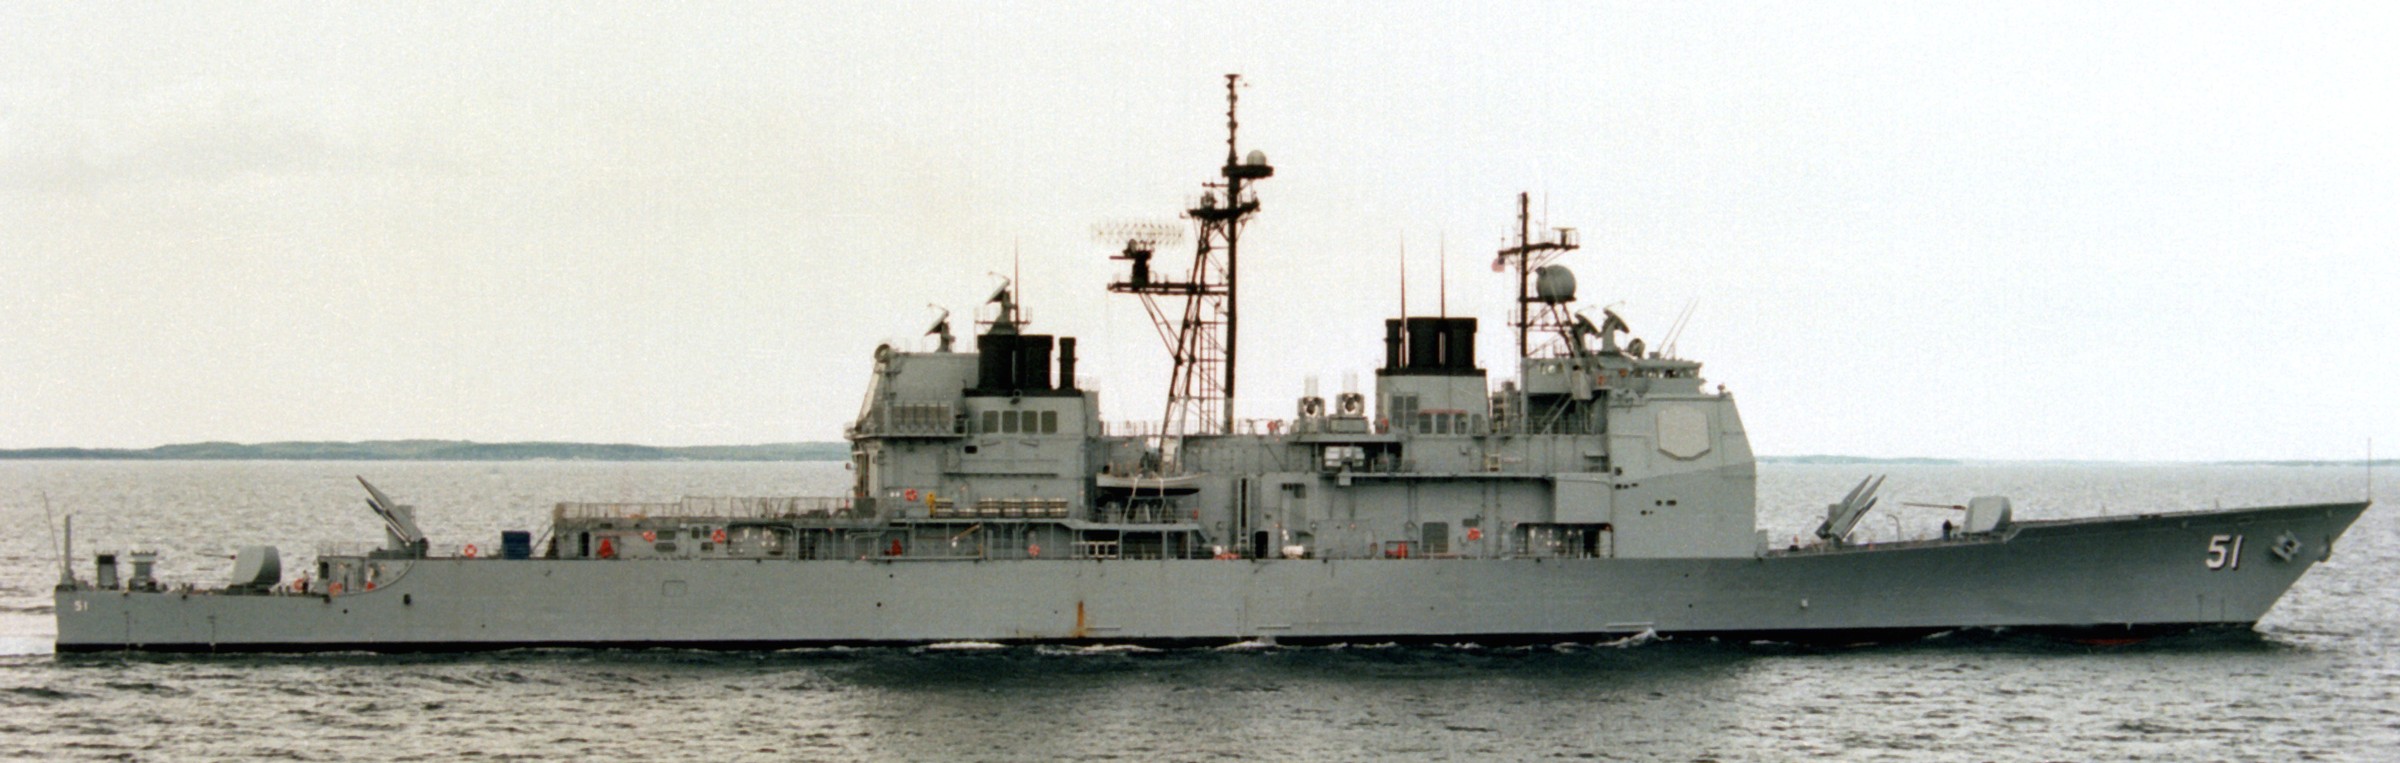 cg-51 uss thomas s. gates ticonderoga class guided missile cruiser aegis us navy 24